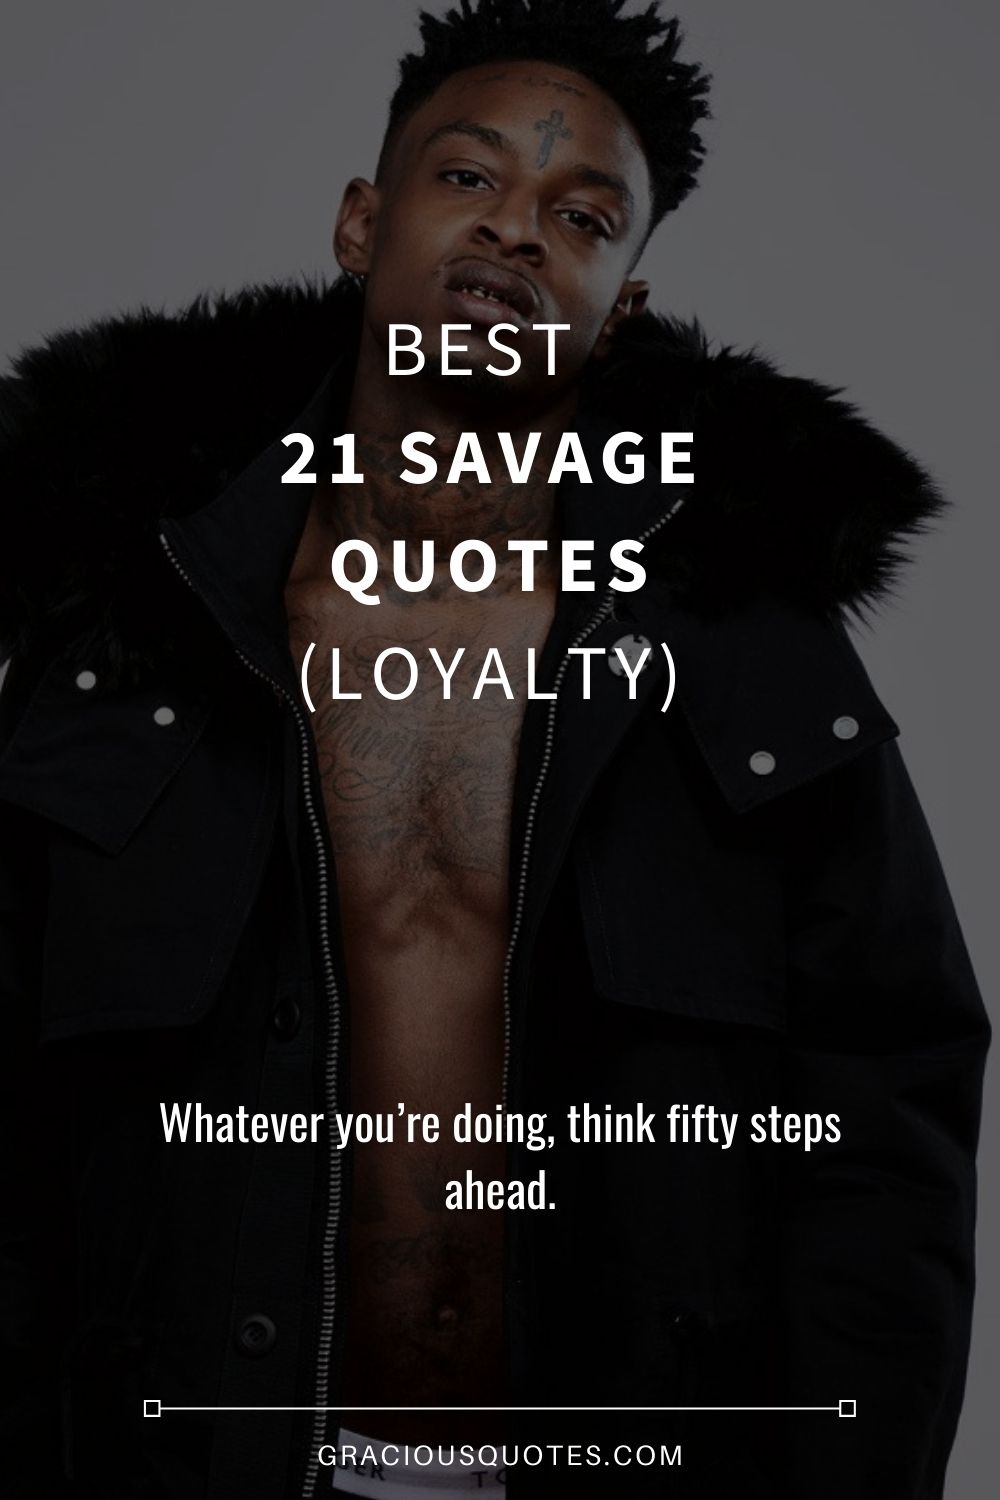 21savage on Instagram: make them regret it everytime